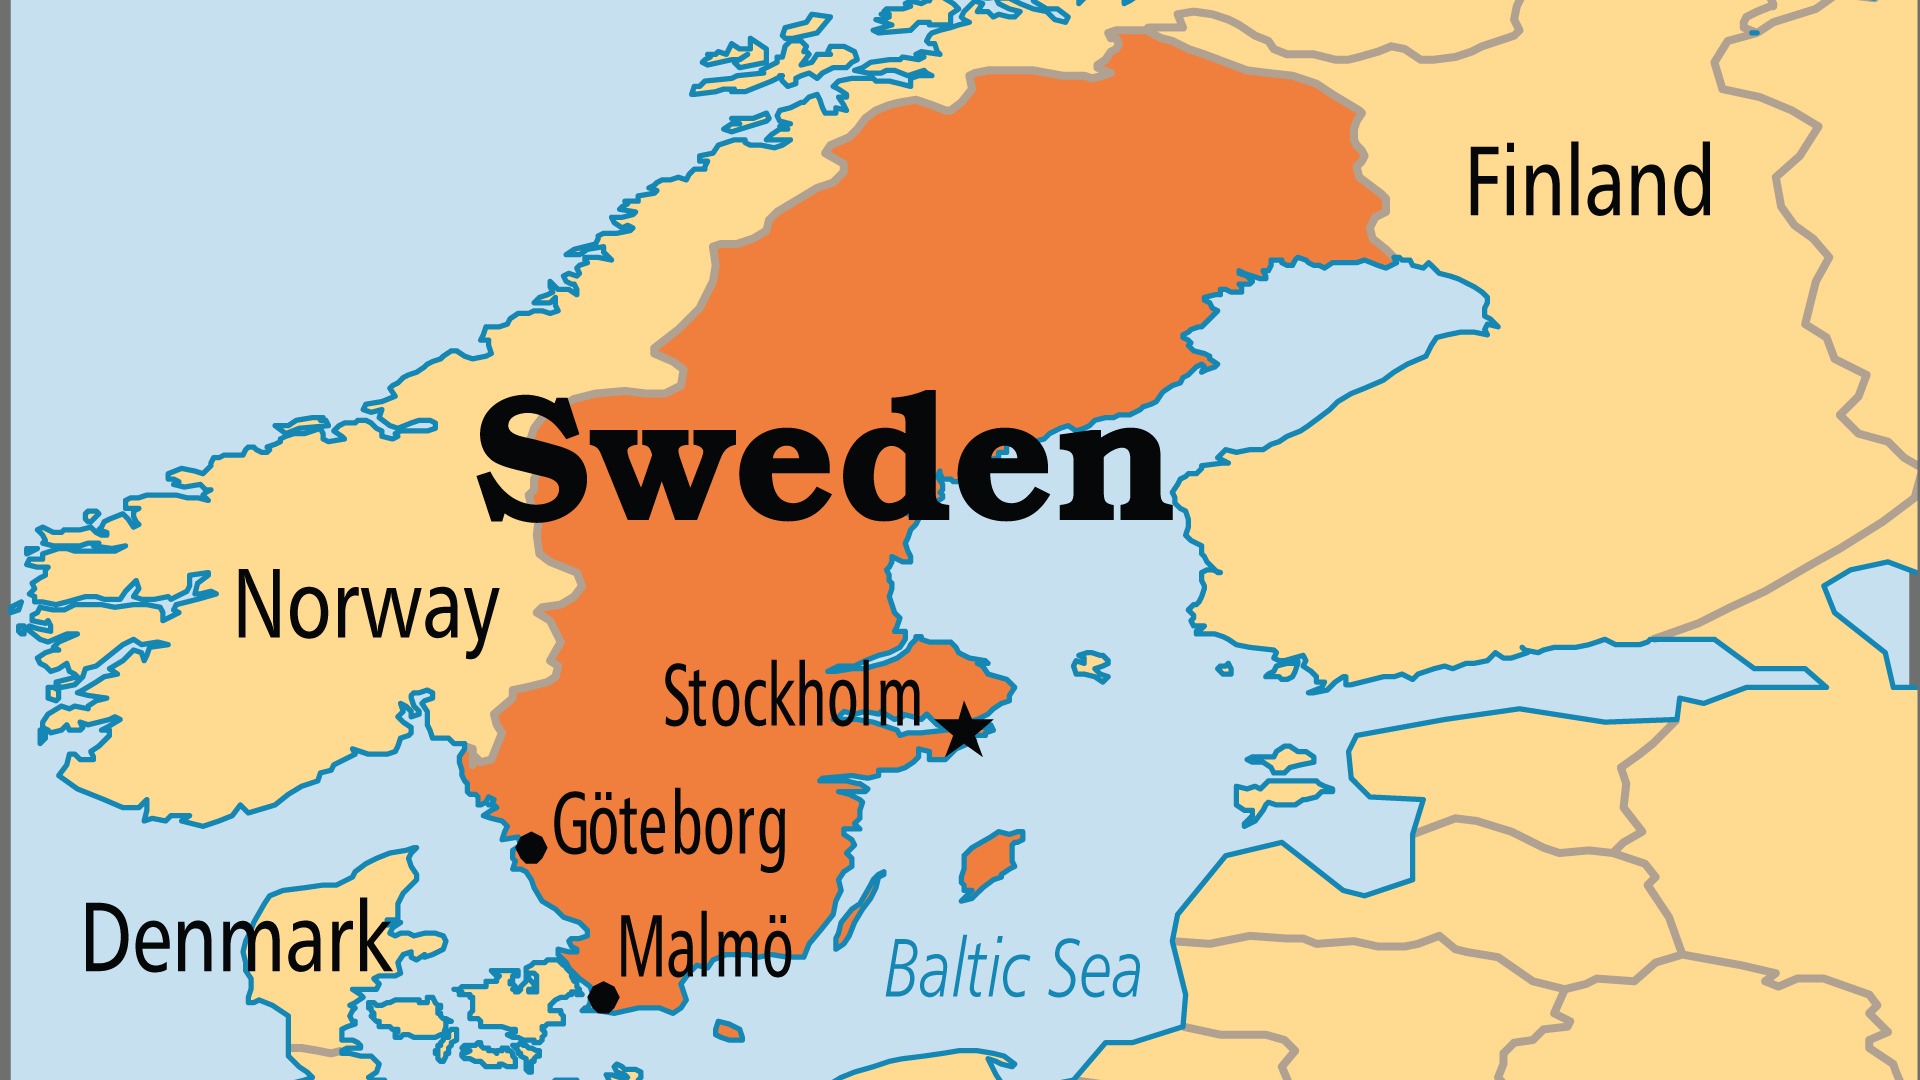 Sweden (Operation World)